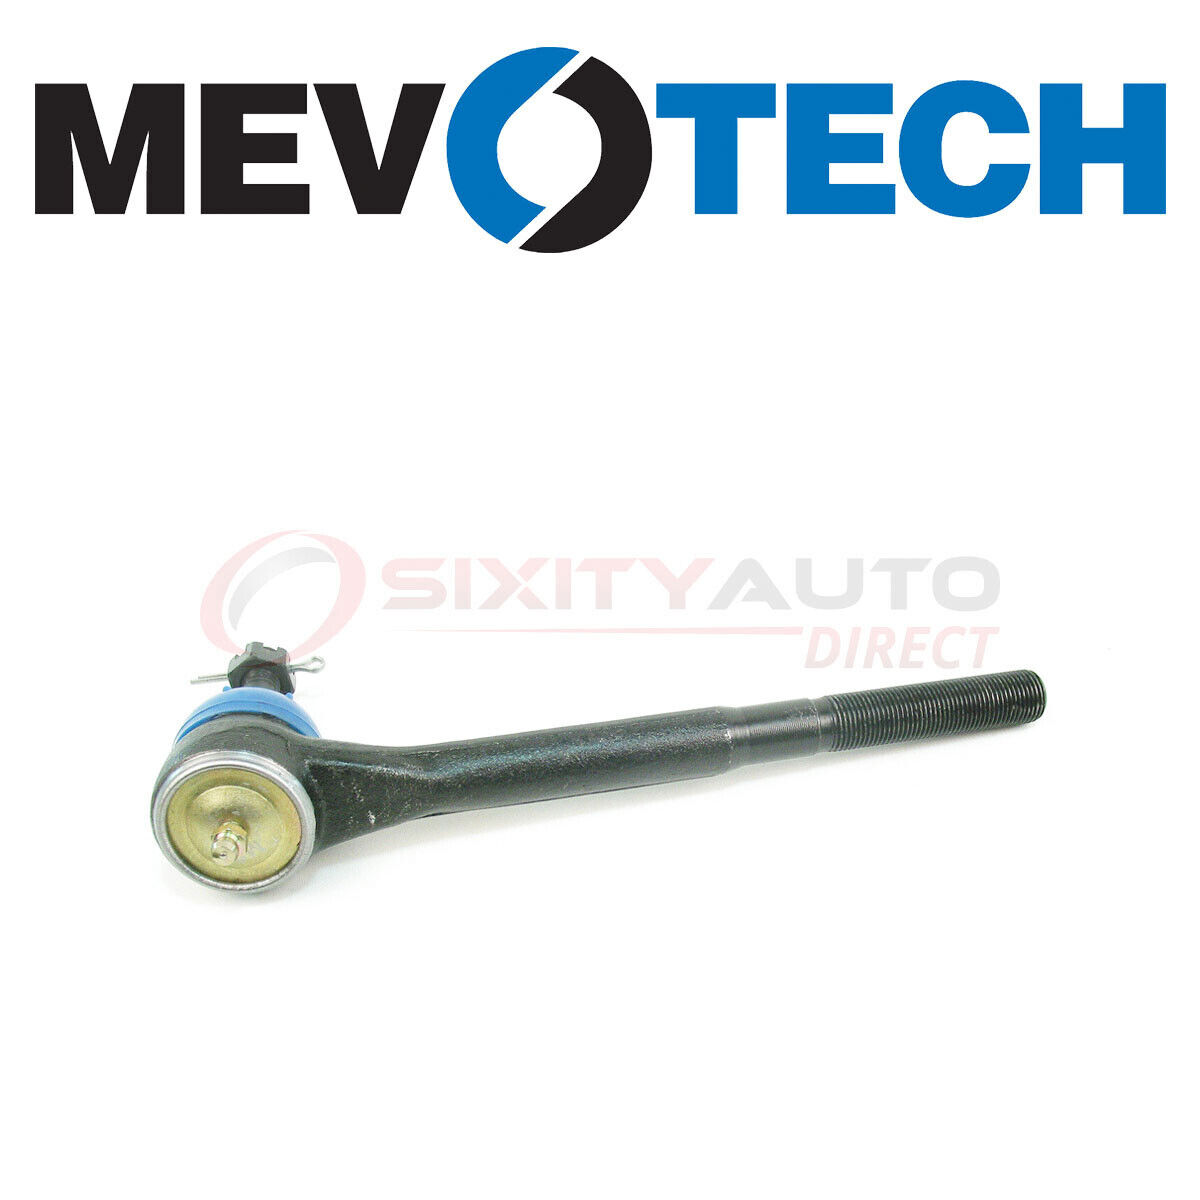 Mevotech Steering Tie Rod End for 1978-1984 Oldsmobile Cutlass Calais 3.8L pv